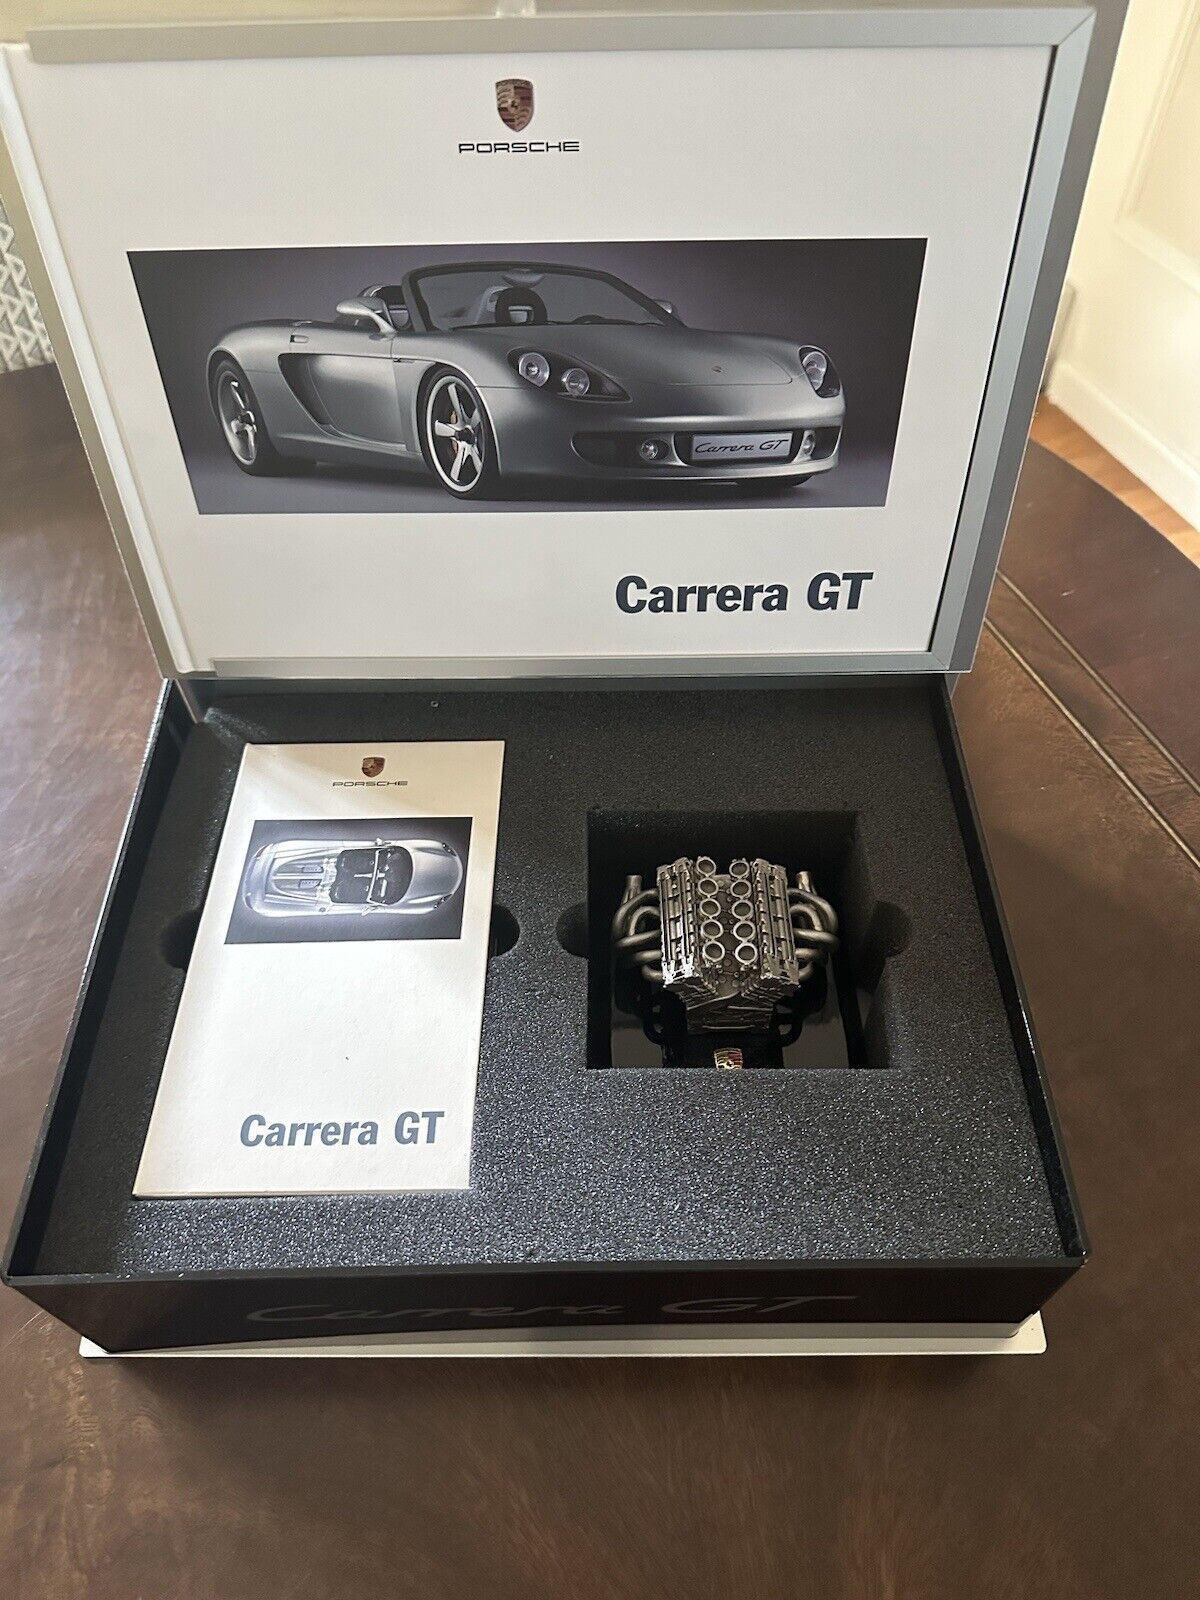 Porsche Carrera GT Pre-Production Dealership Launch Kit Complete Owners Kit